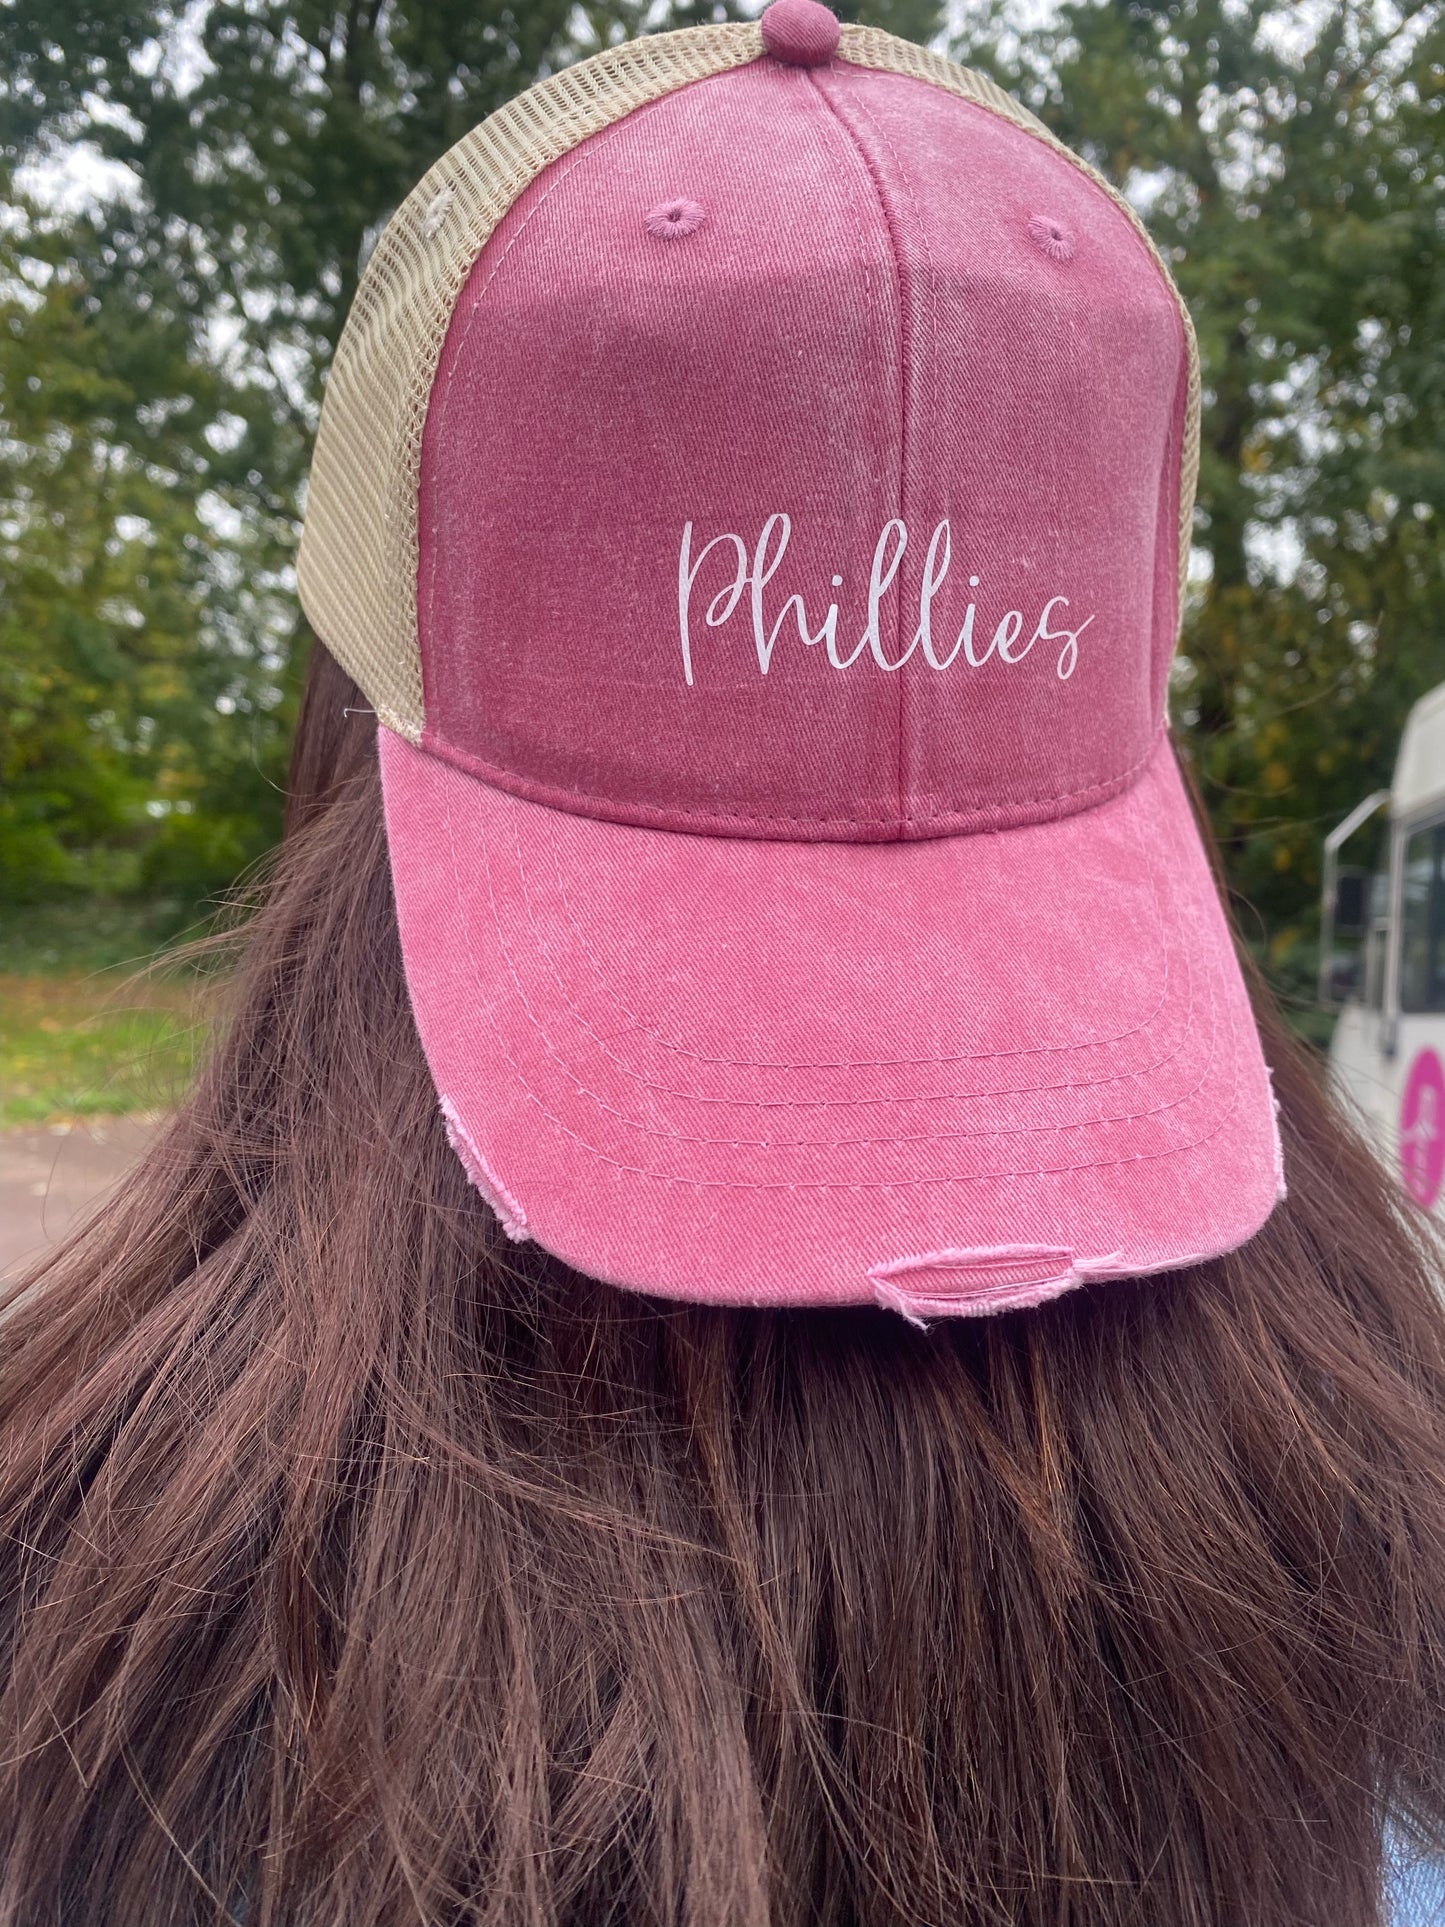 Phillies Trucker Hat